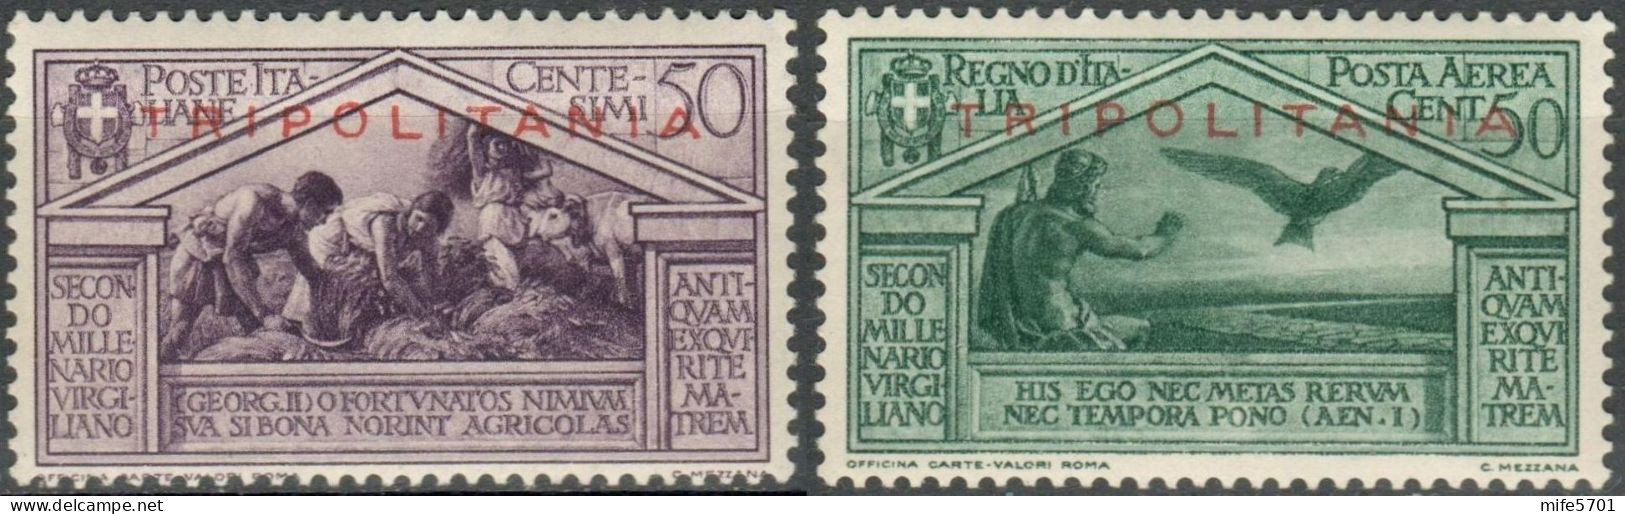 REGNO / COLONIE / TRIPOLITANIA 1930 - BIMILLENARIO NASCITA VIRGILIO C. 50 E 50 P.AEREA SOPRASTAMPATI - MNH SASSONE 82/A4 - Tripolitaine